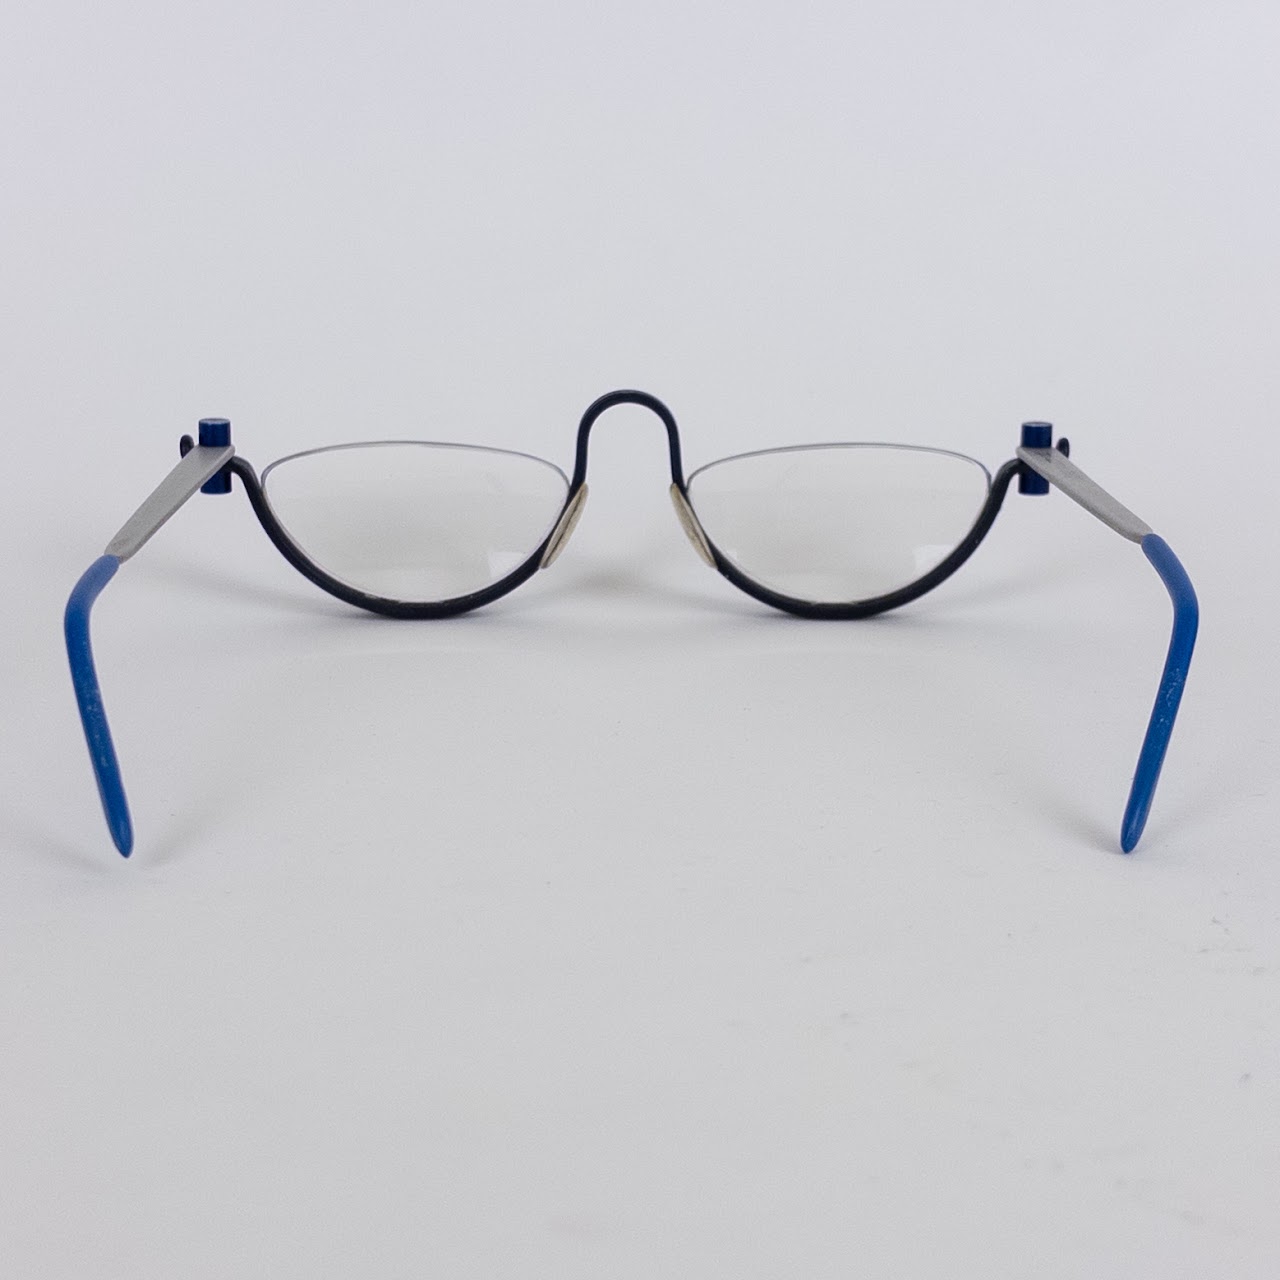 Gail Spence Design No. One Reader Glasses